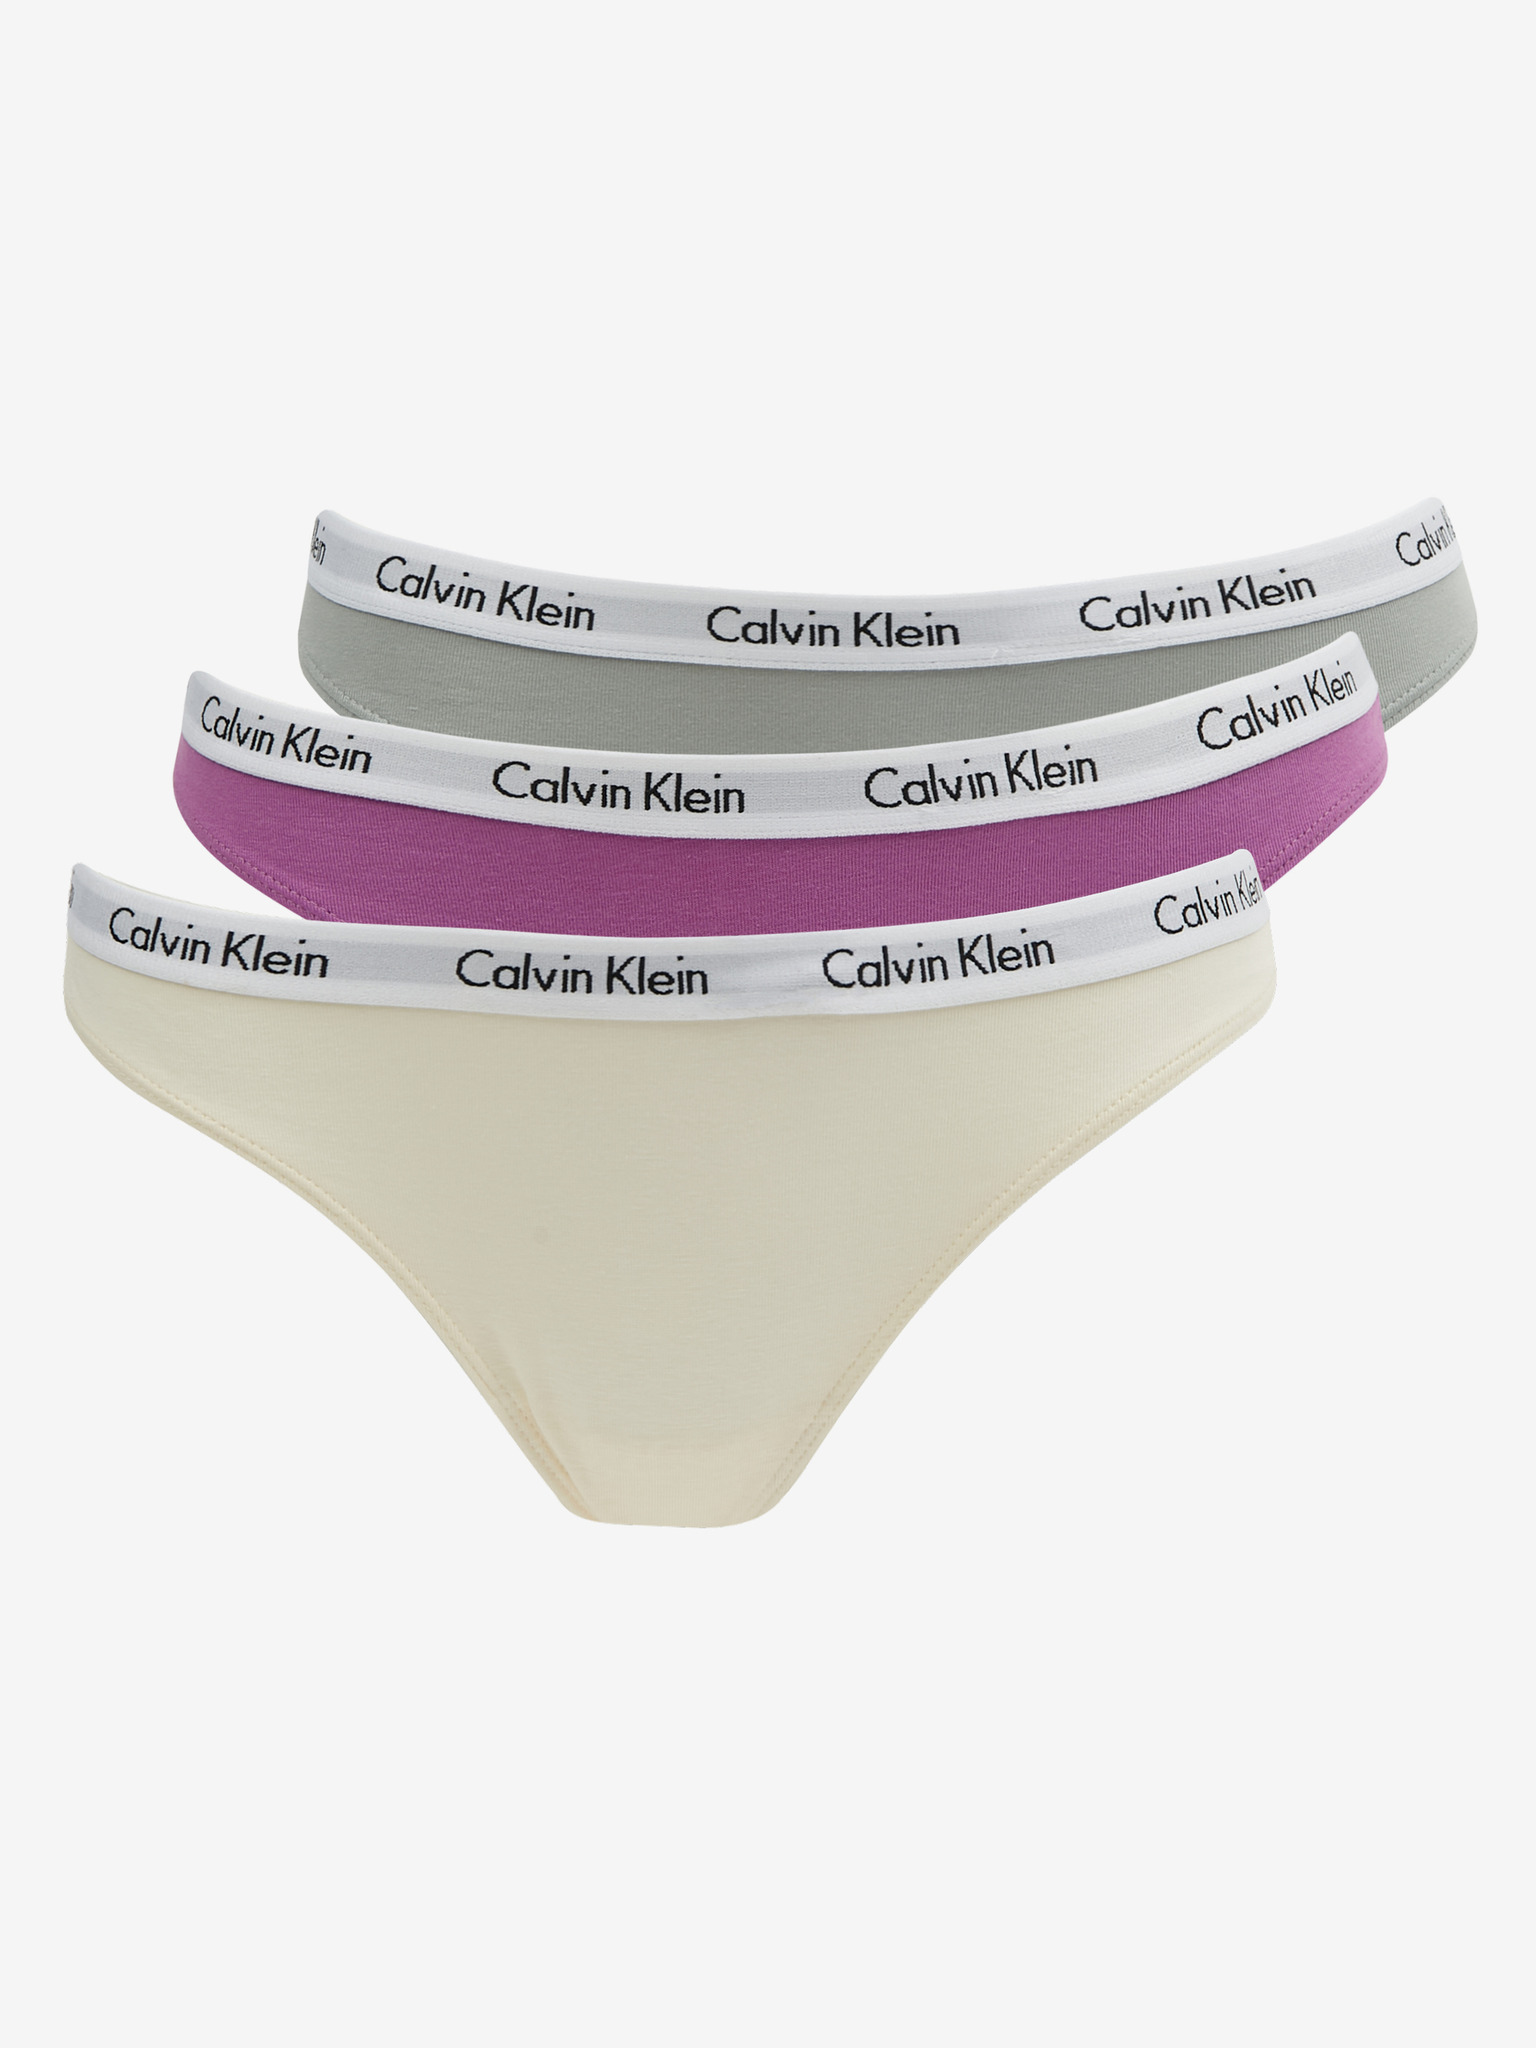 Buy Calvin Klein Bikini Bottoms 3 Pack from Next Luxembourg